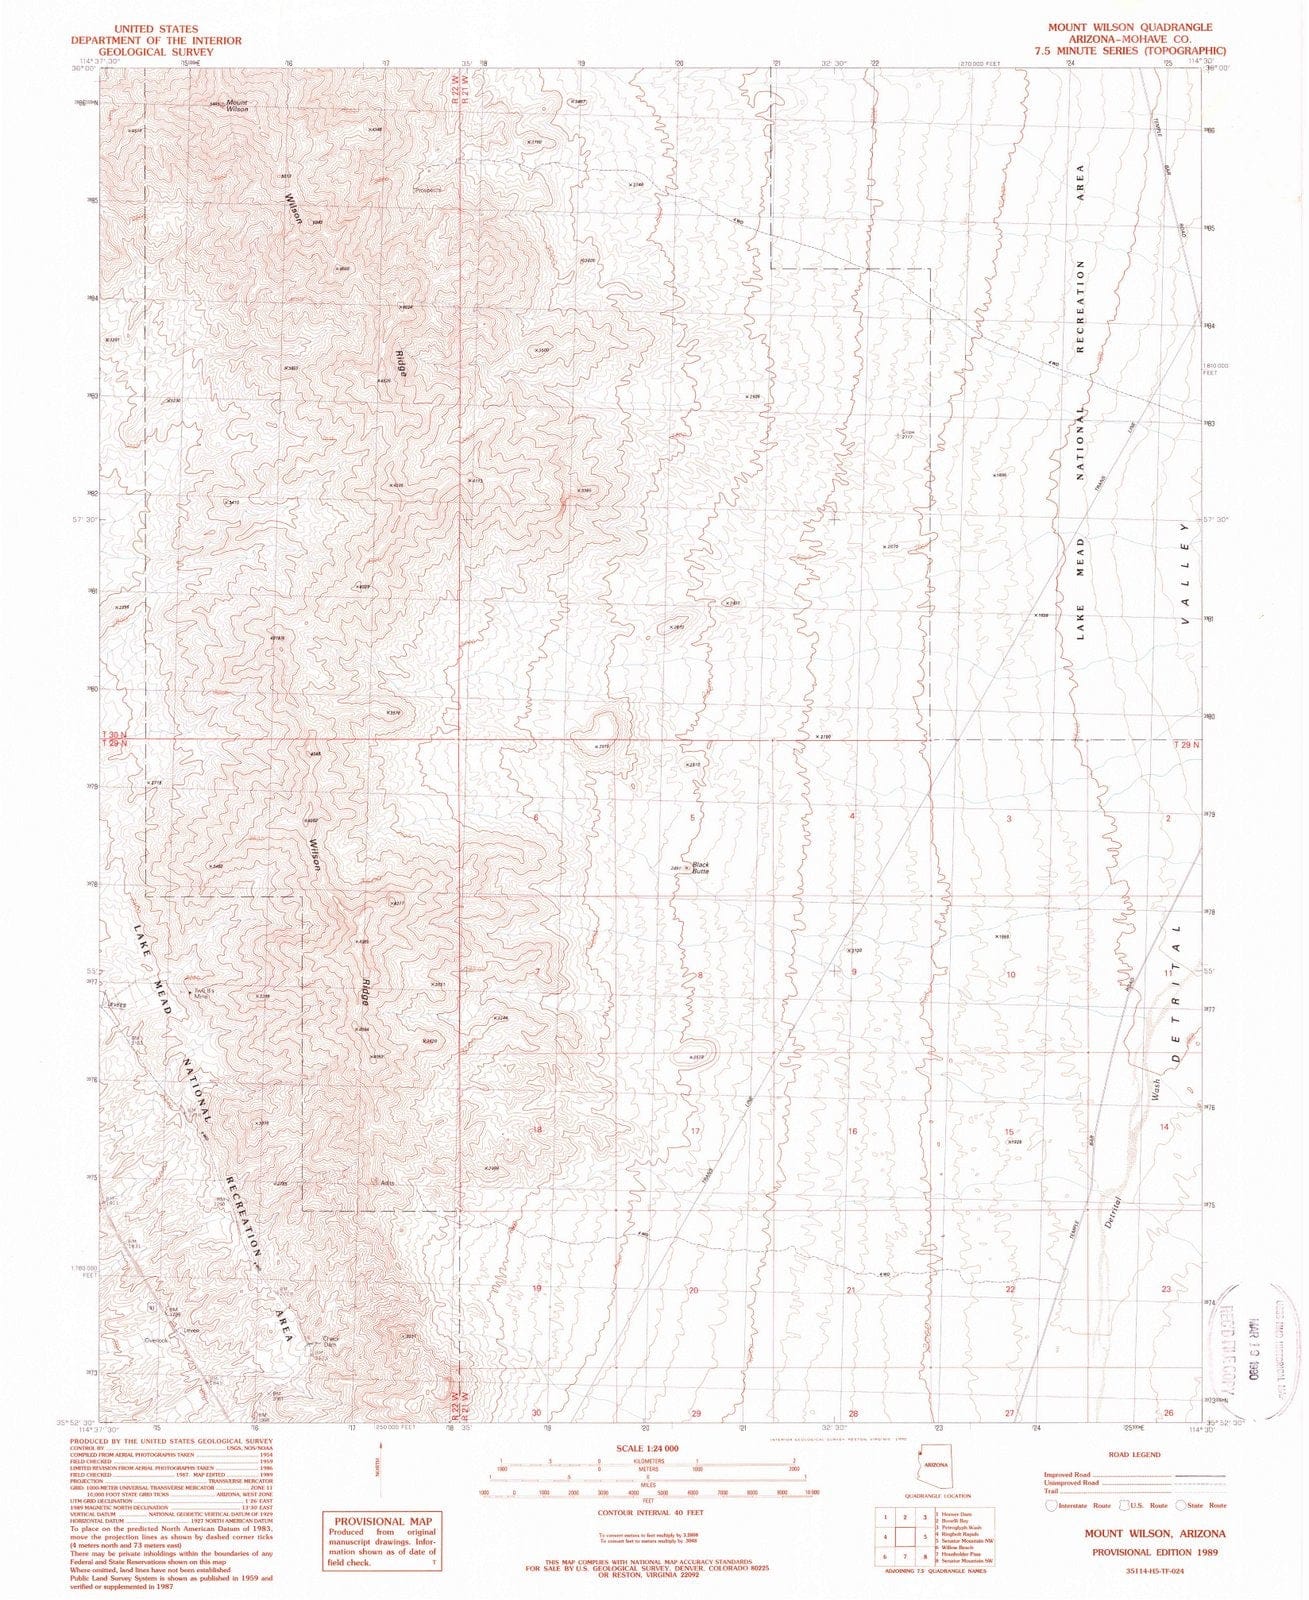 1989 Mount Wilson, AZ - Arizona - USGS Topographic Map